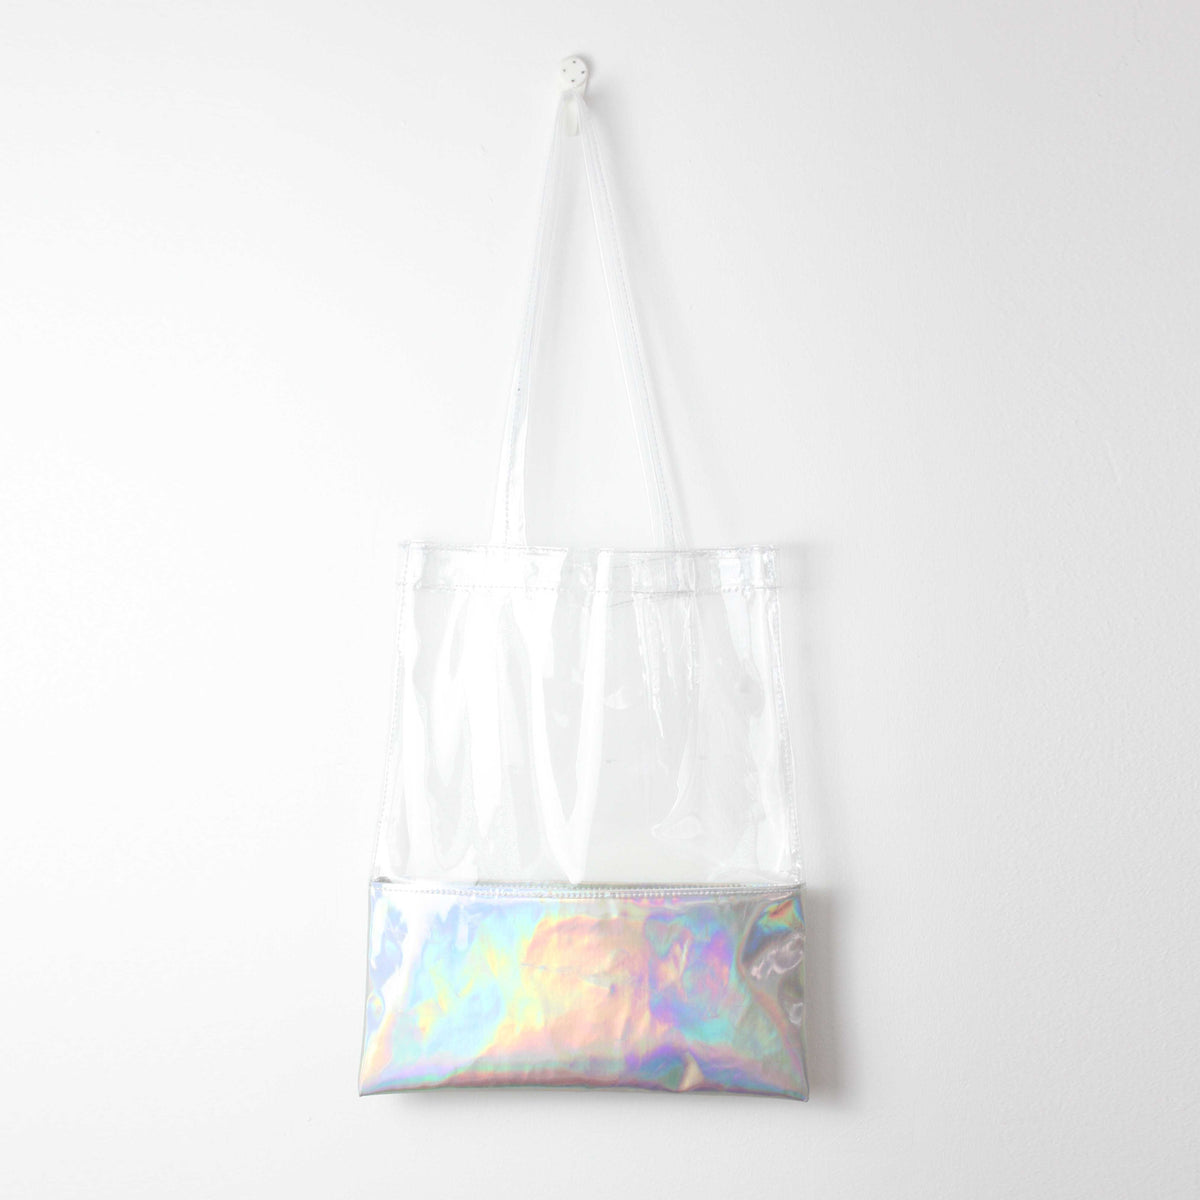 holographic beach bag